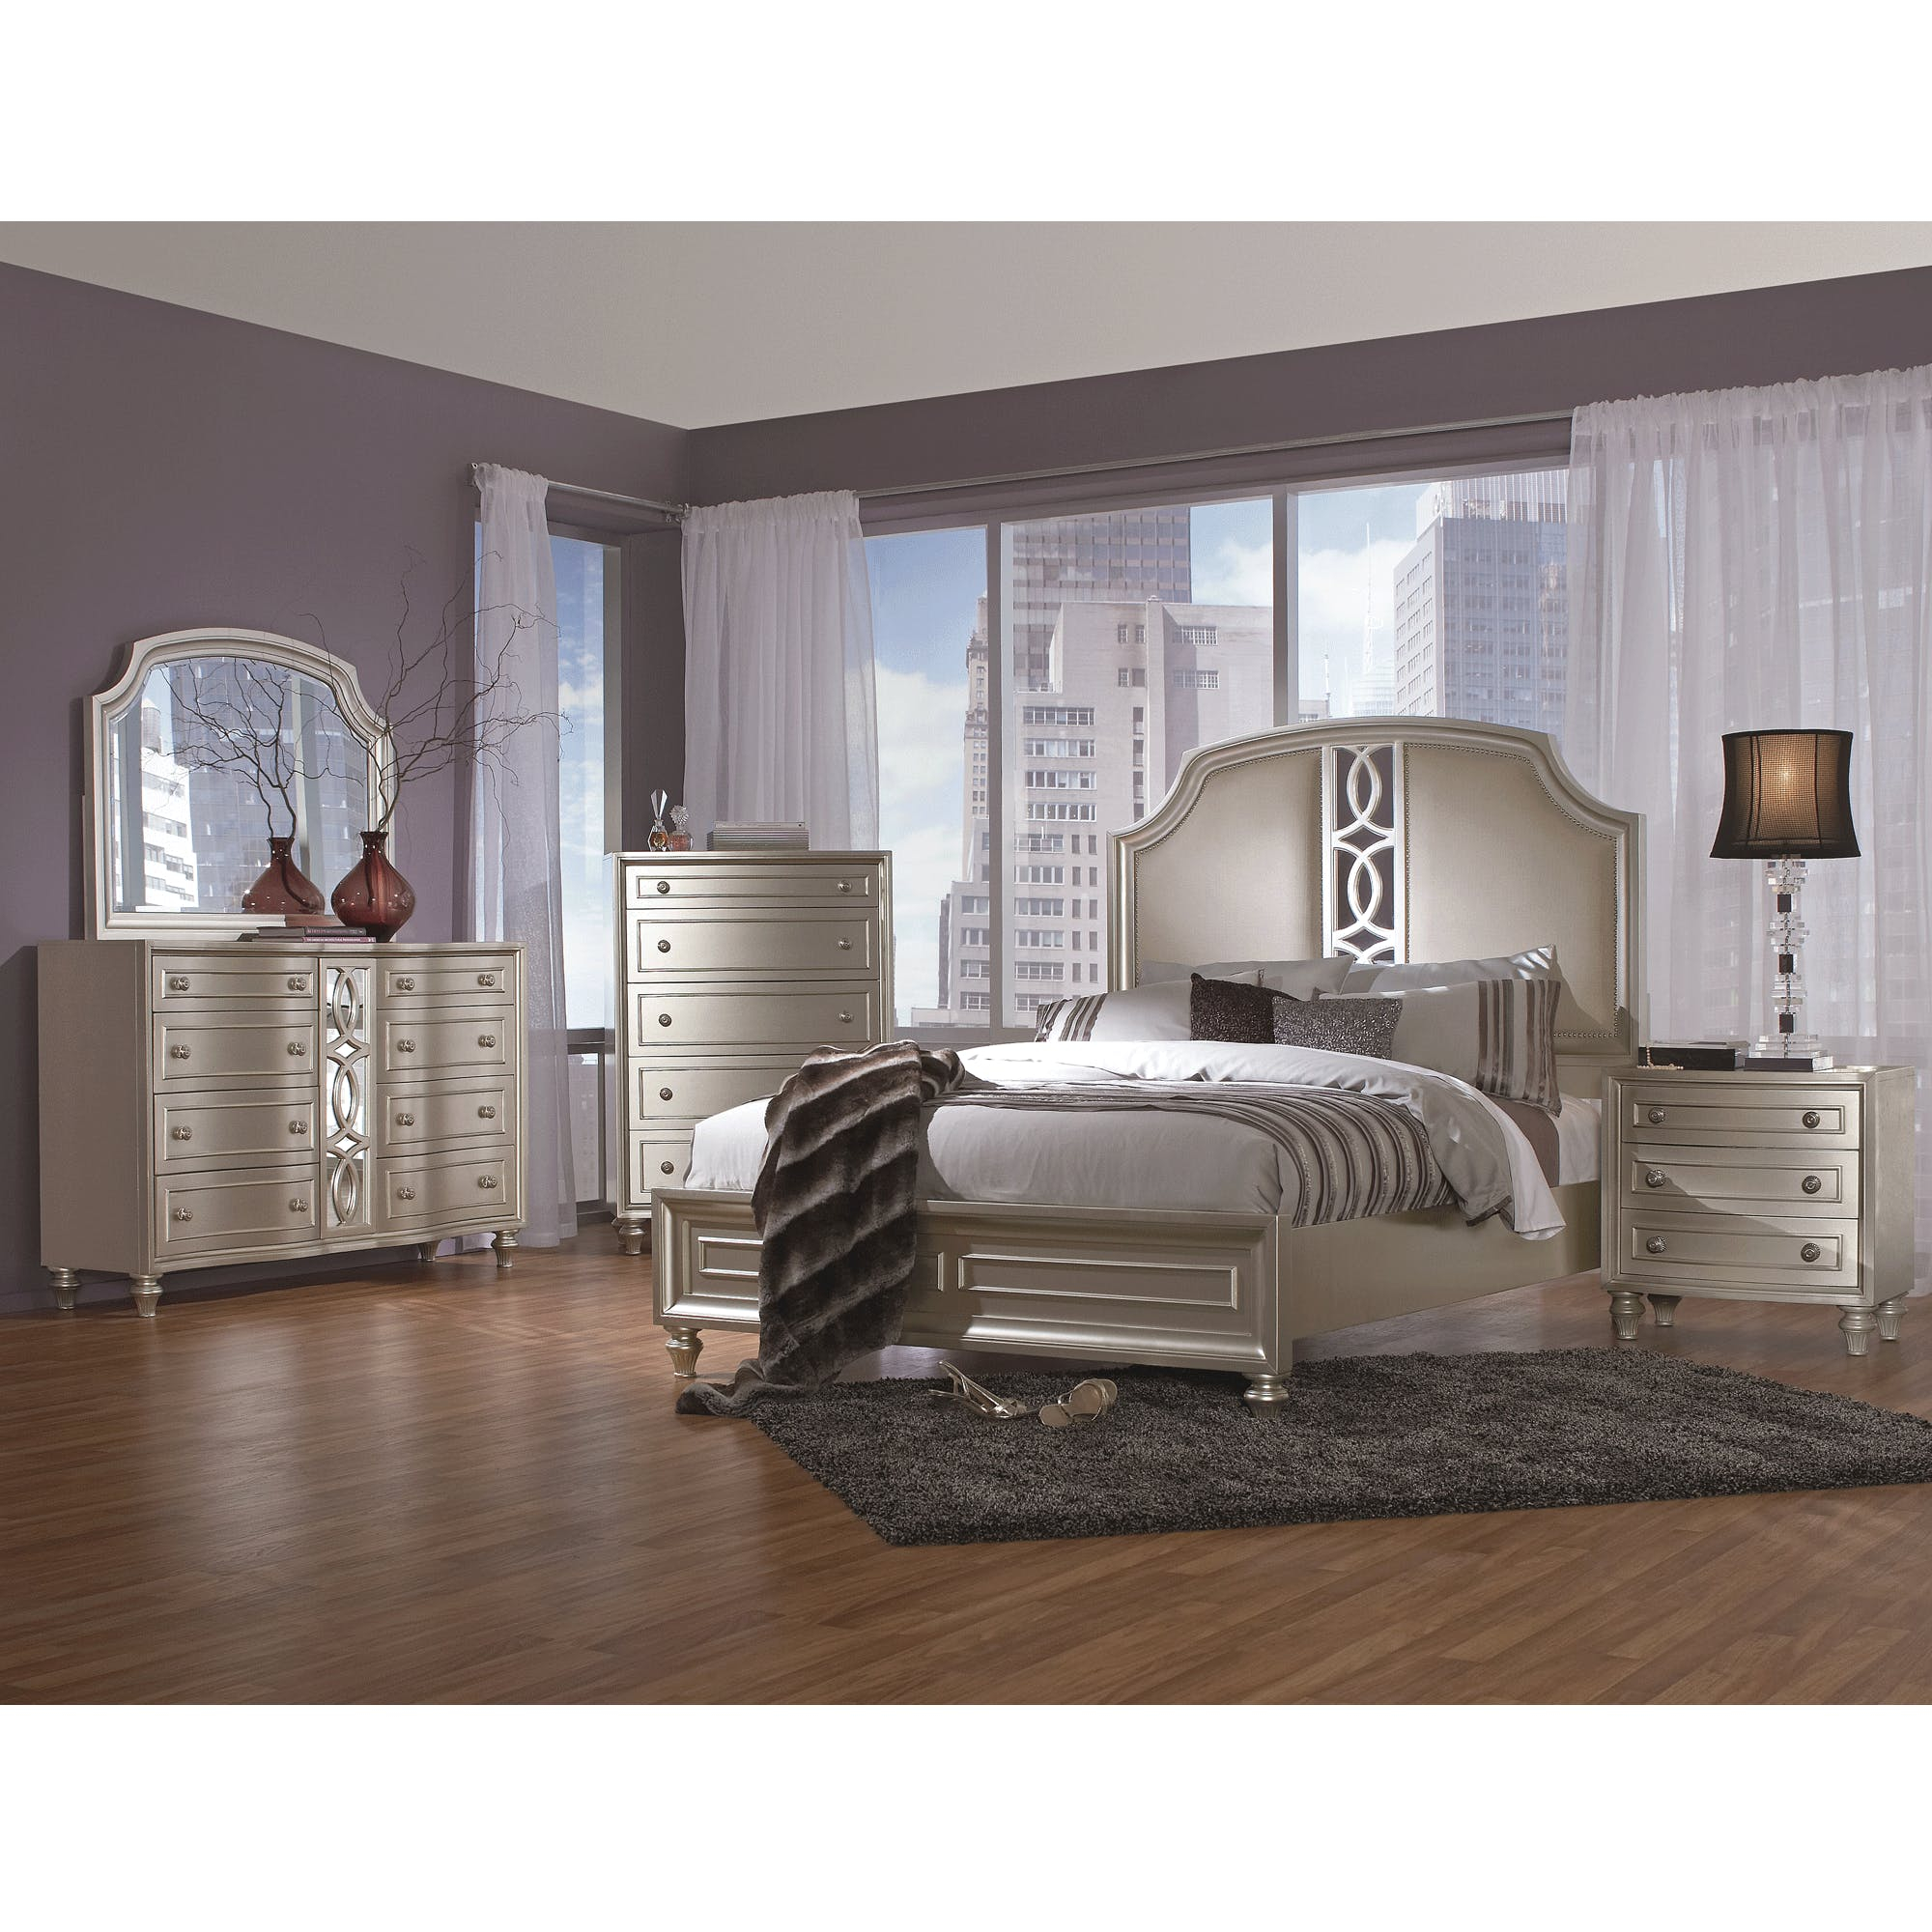 Regency Park Upholstered Bed Bernie Phyls Furniture Avalon throughout measurements 2000 X 2000